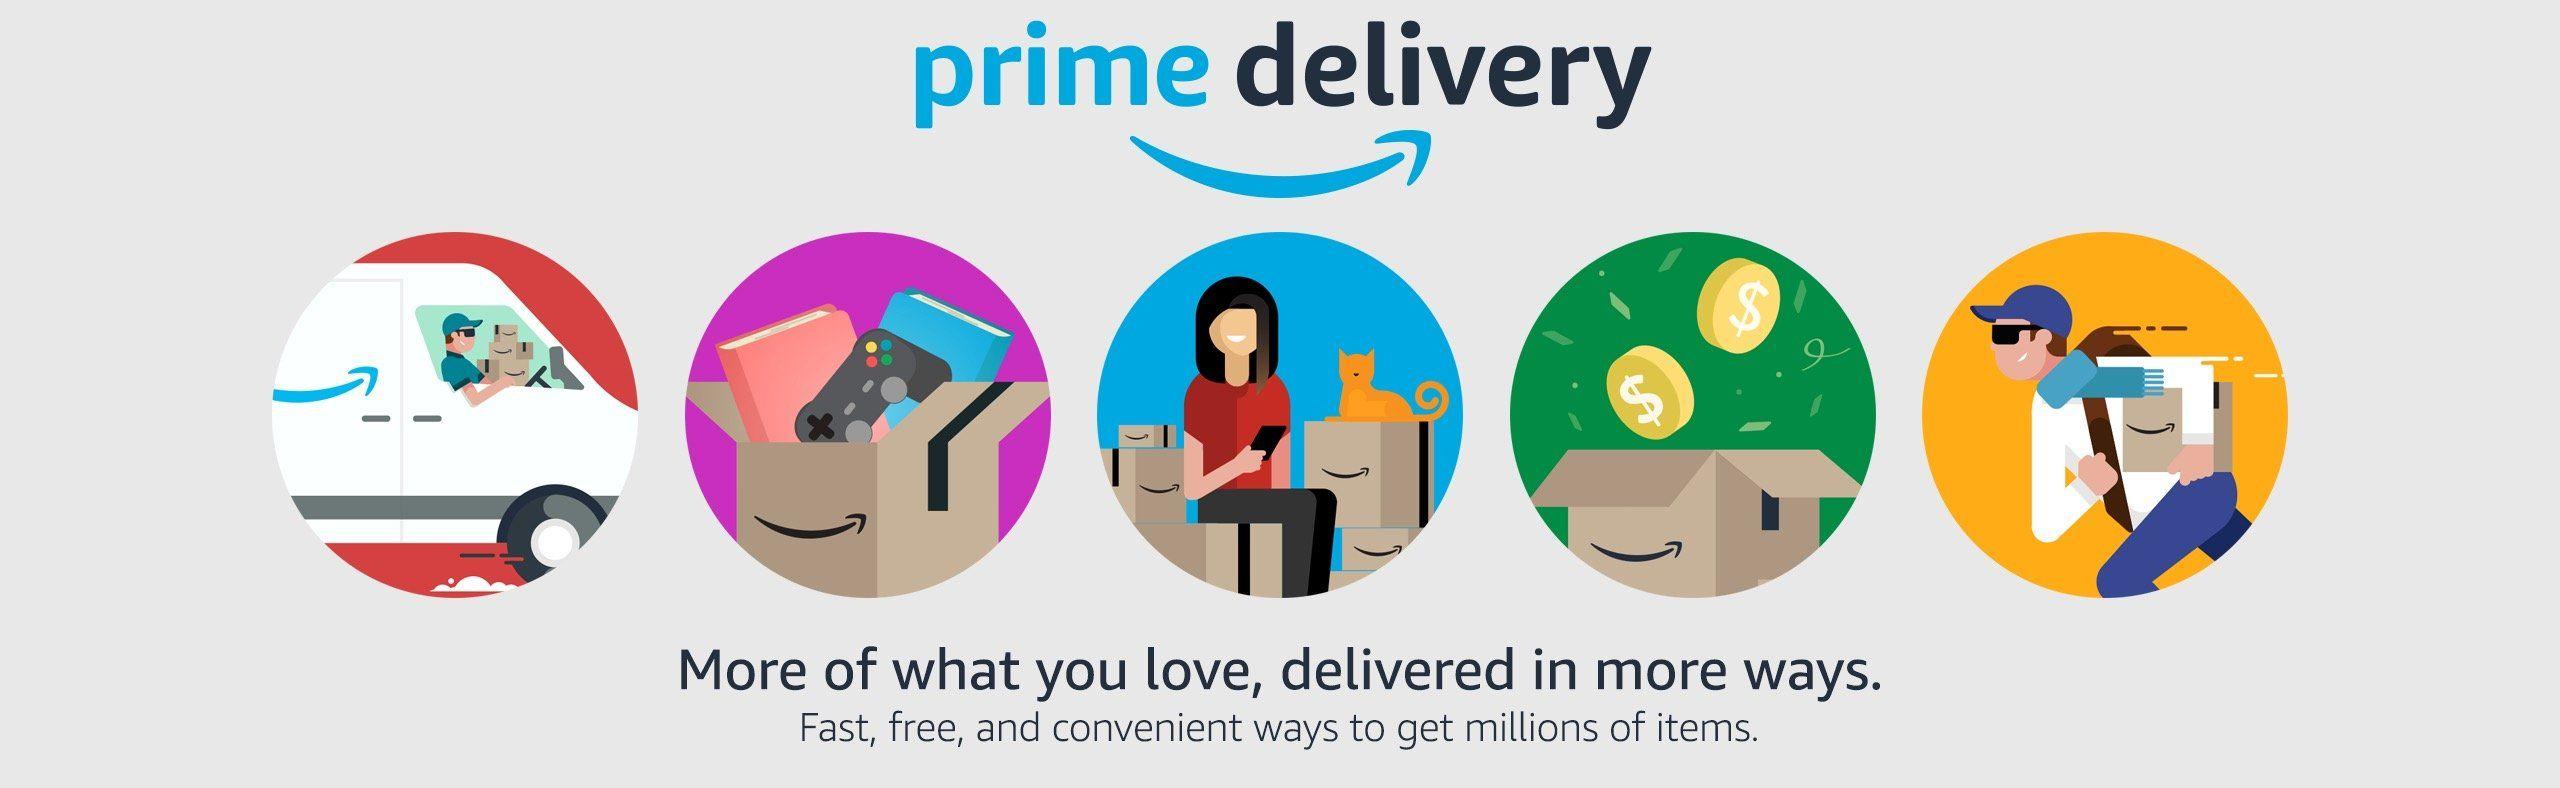 Amazon.com Logo - Prime Delivery